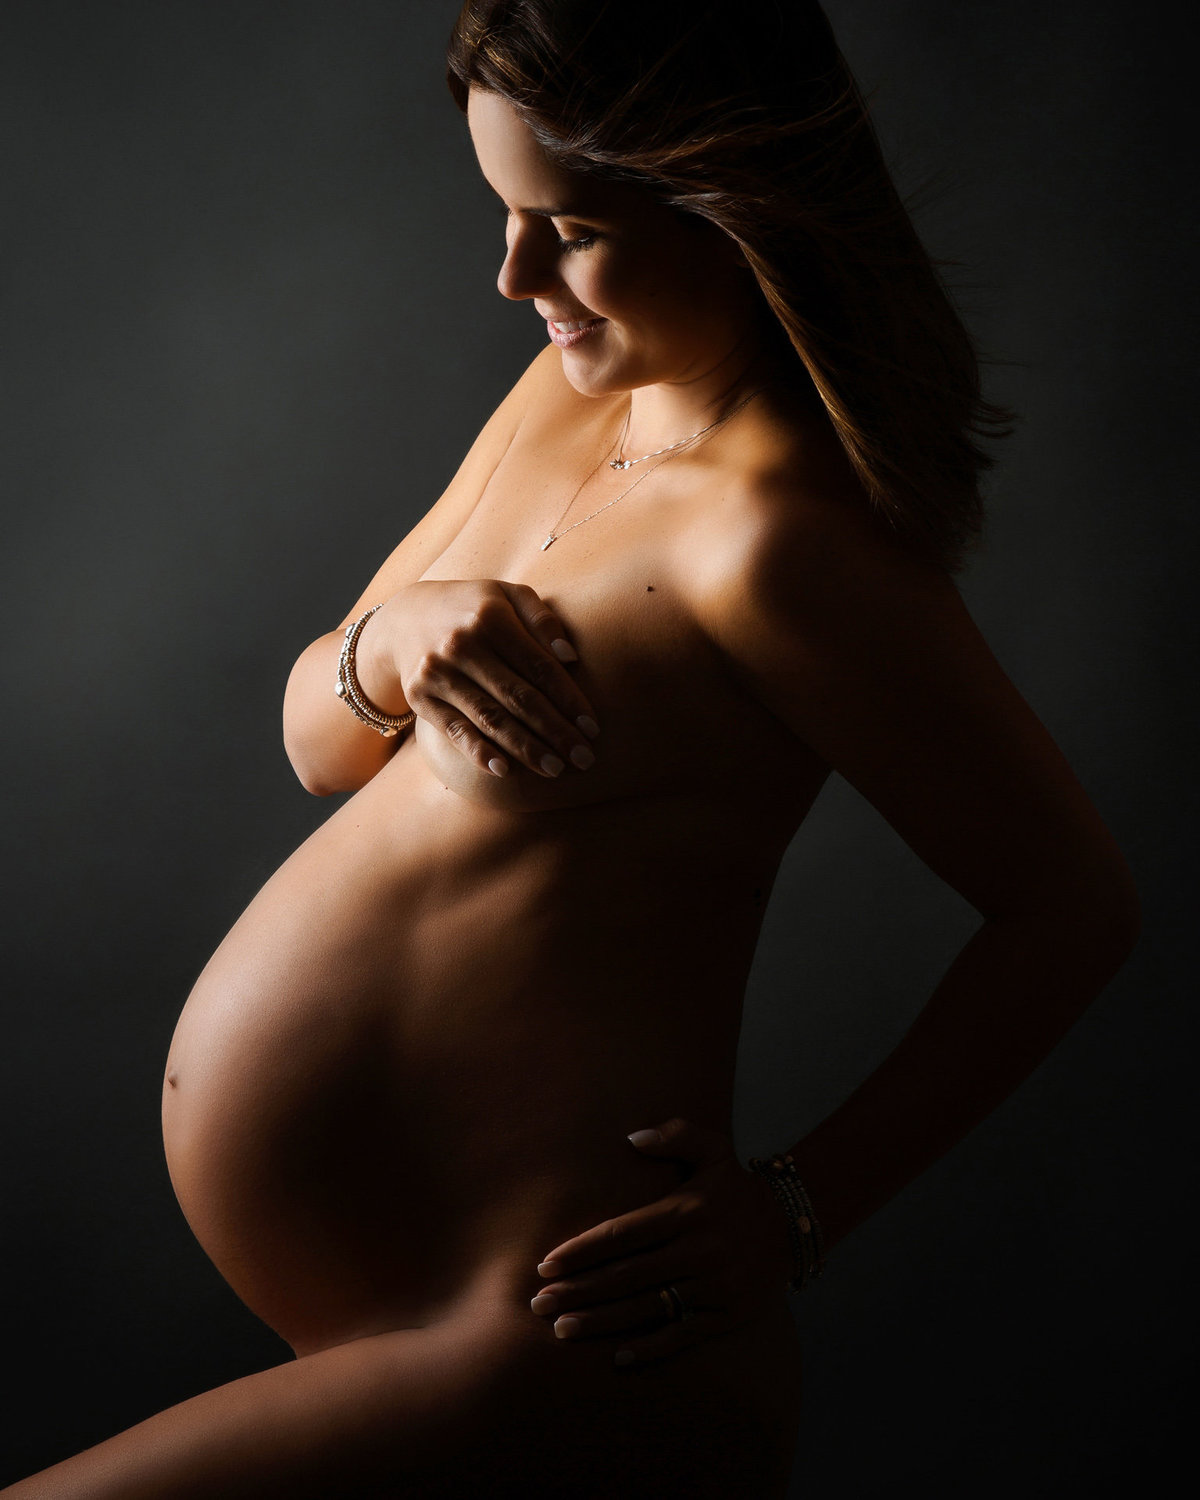 maternityphotographylondon013